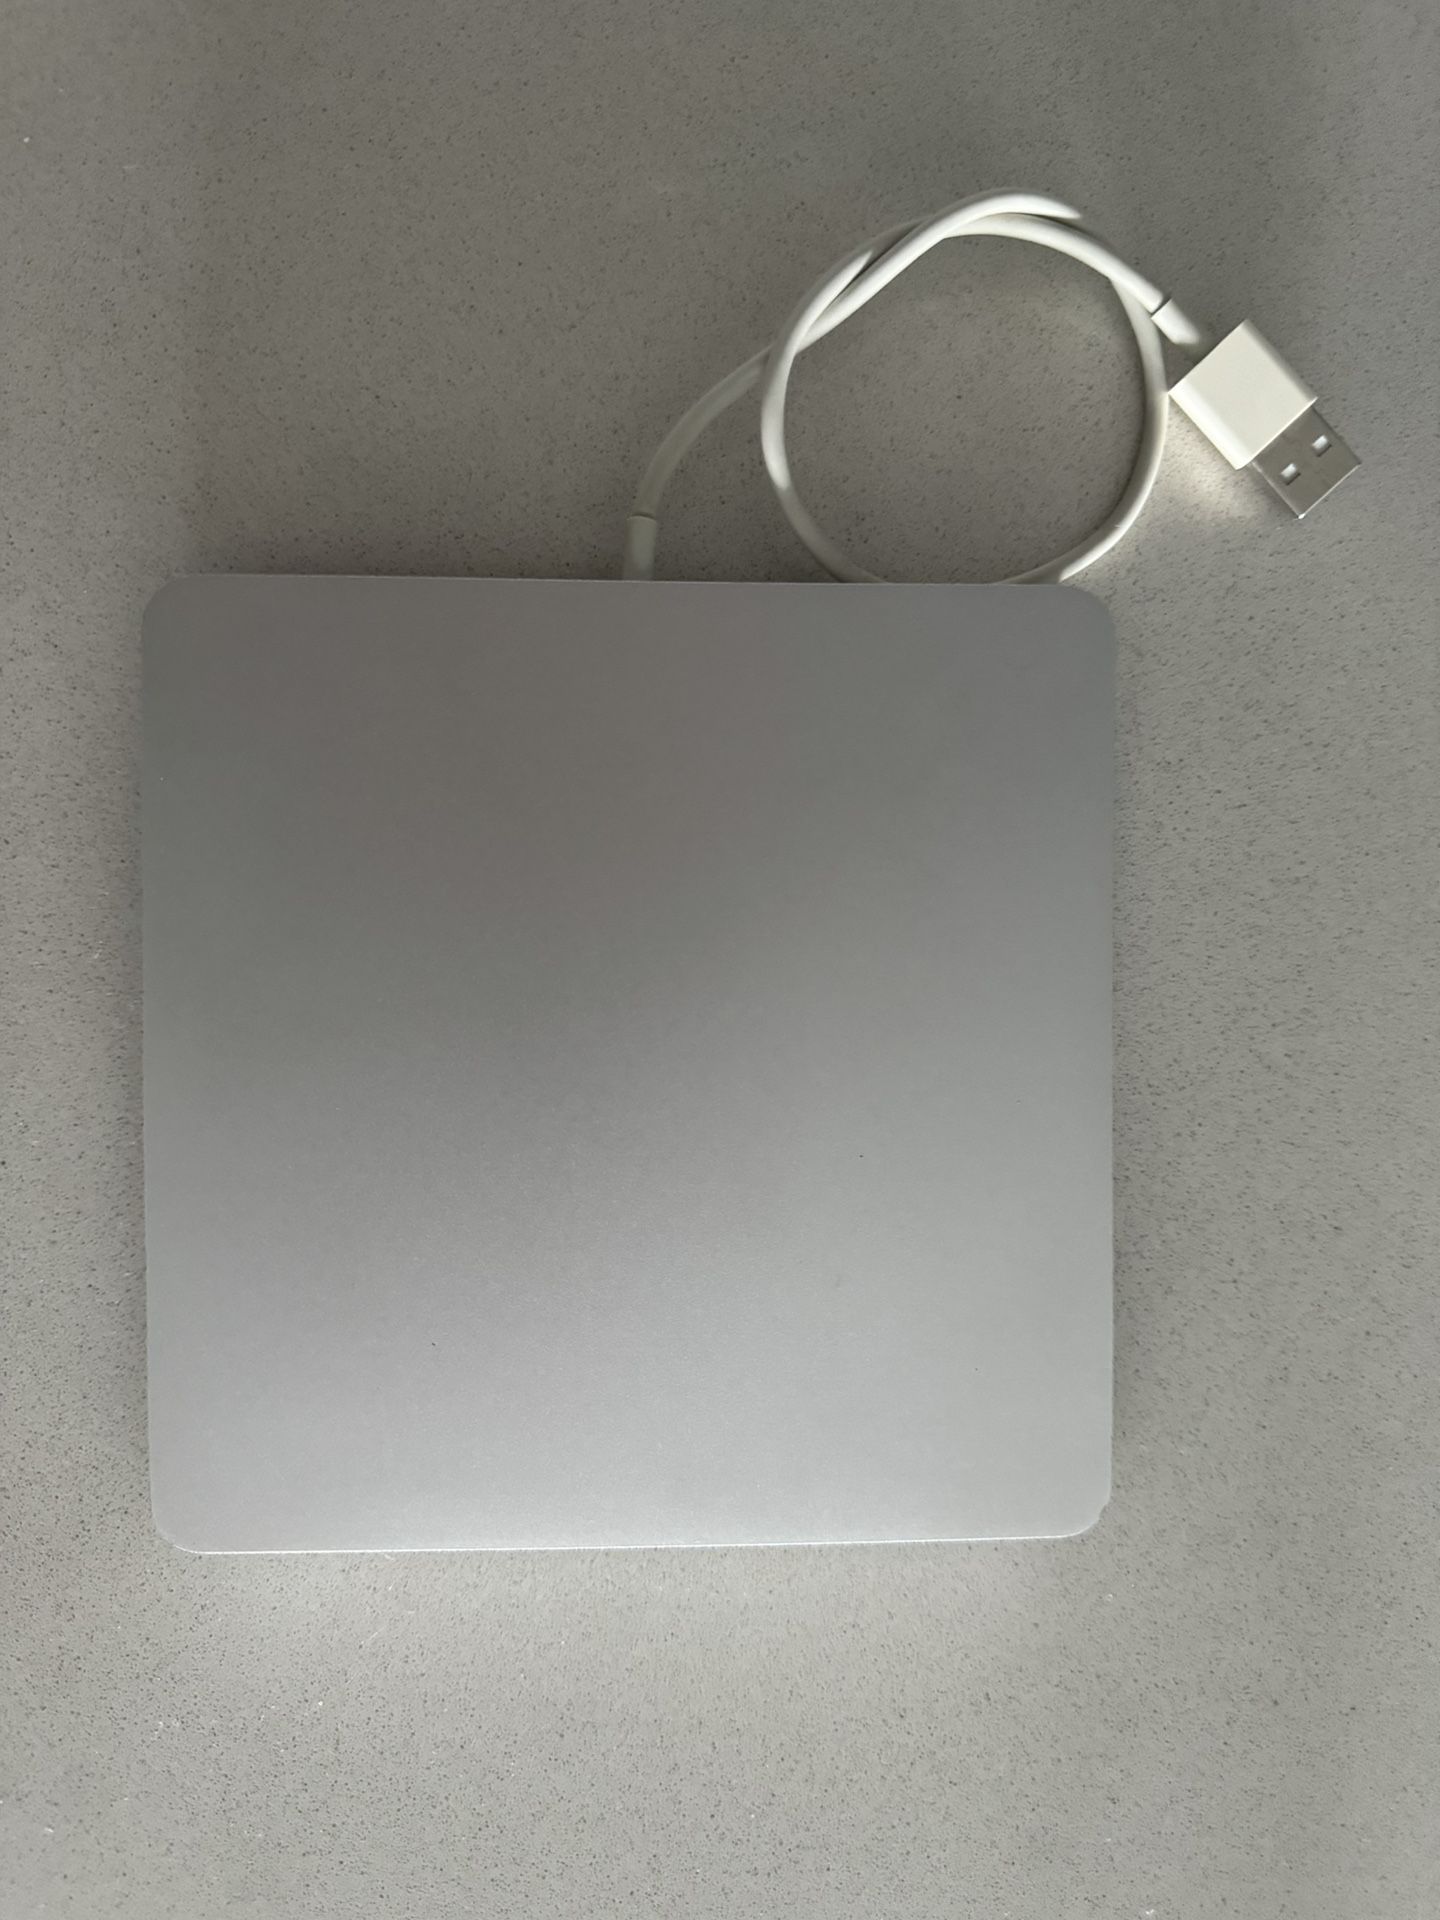 Apple Superdrive USB